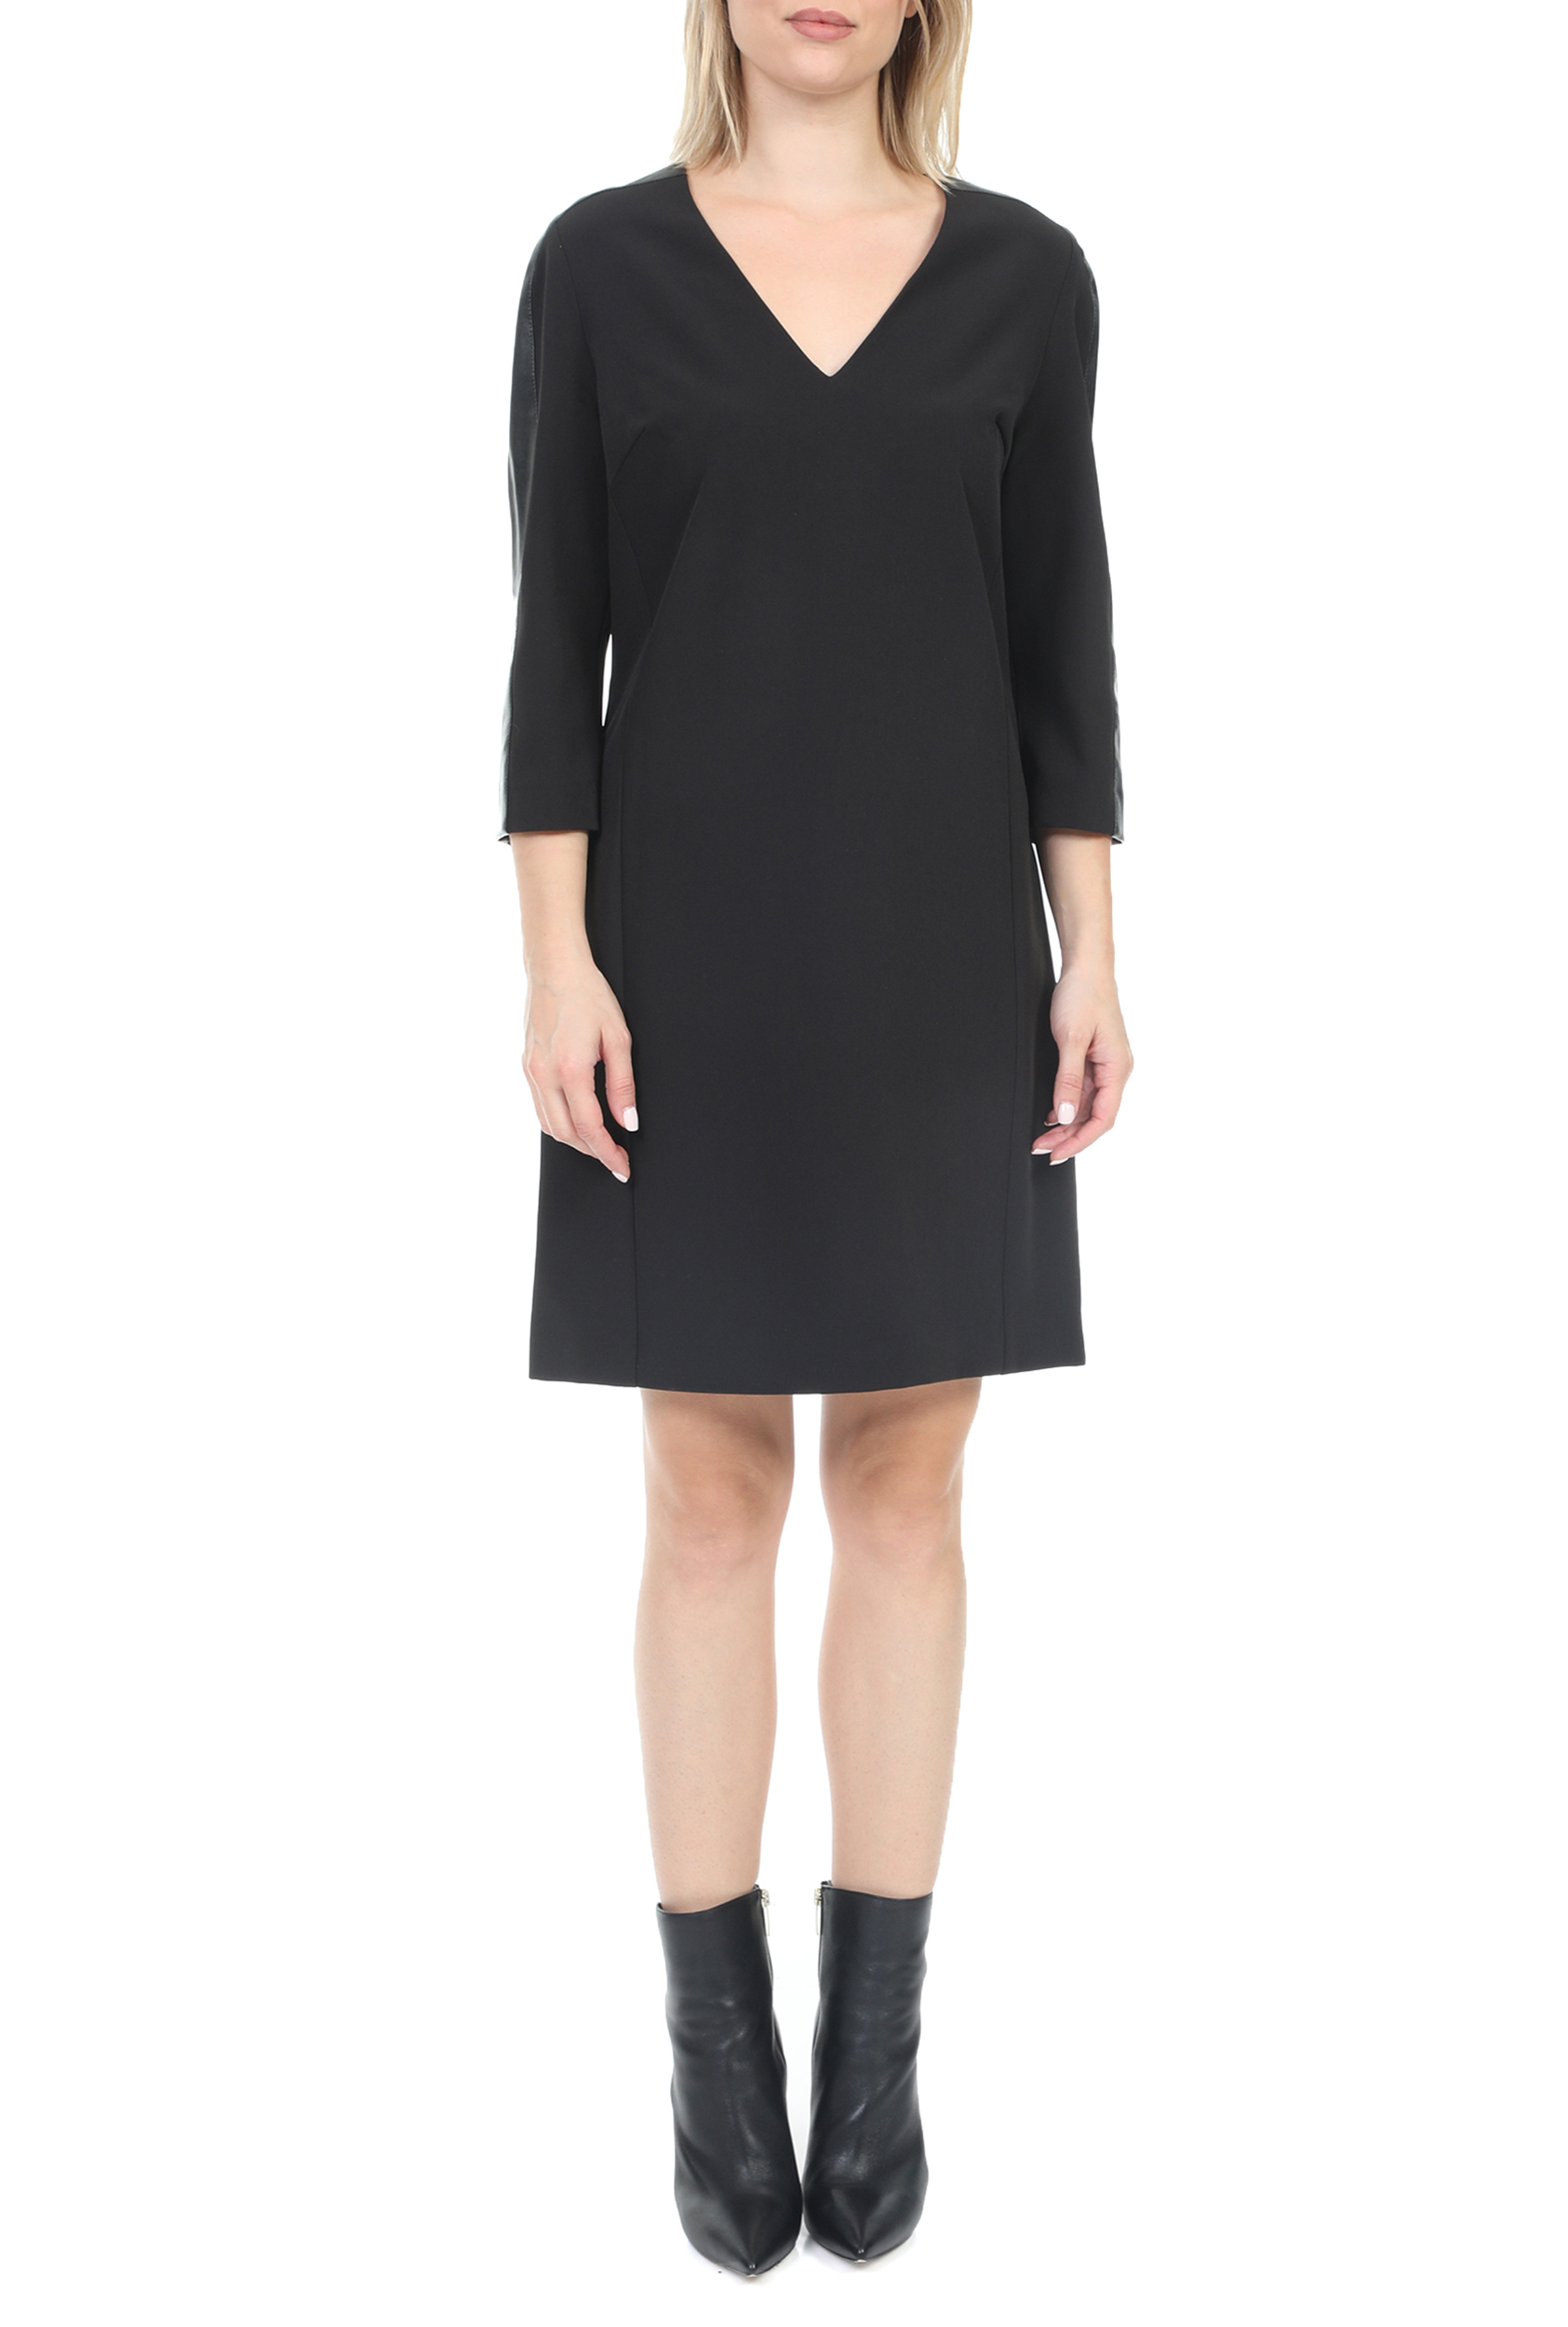 KOCCA – Γυναικείο mini φόρεμα KOCCA HORIBA μαύρο 1802652.0-0071